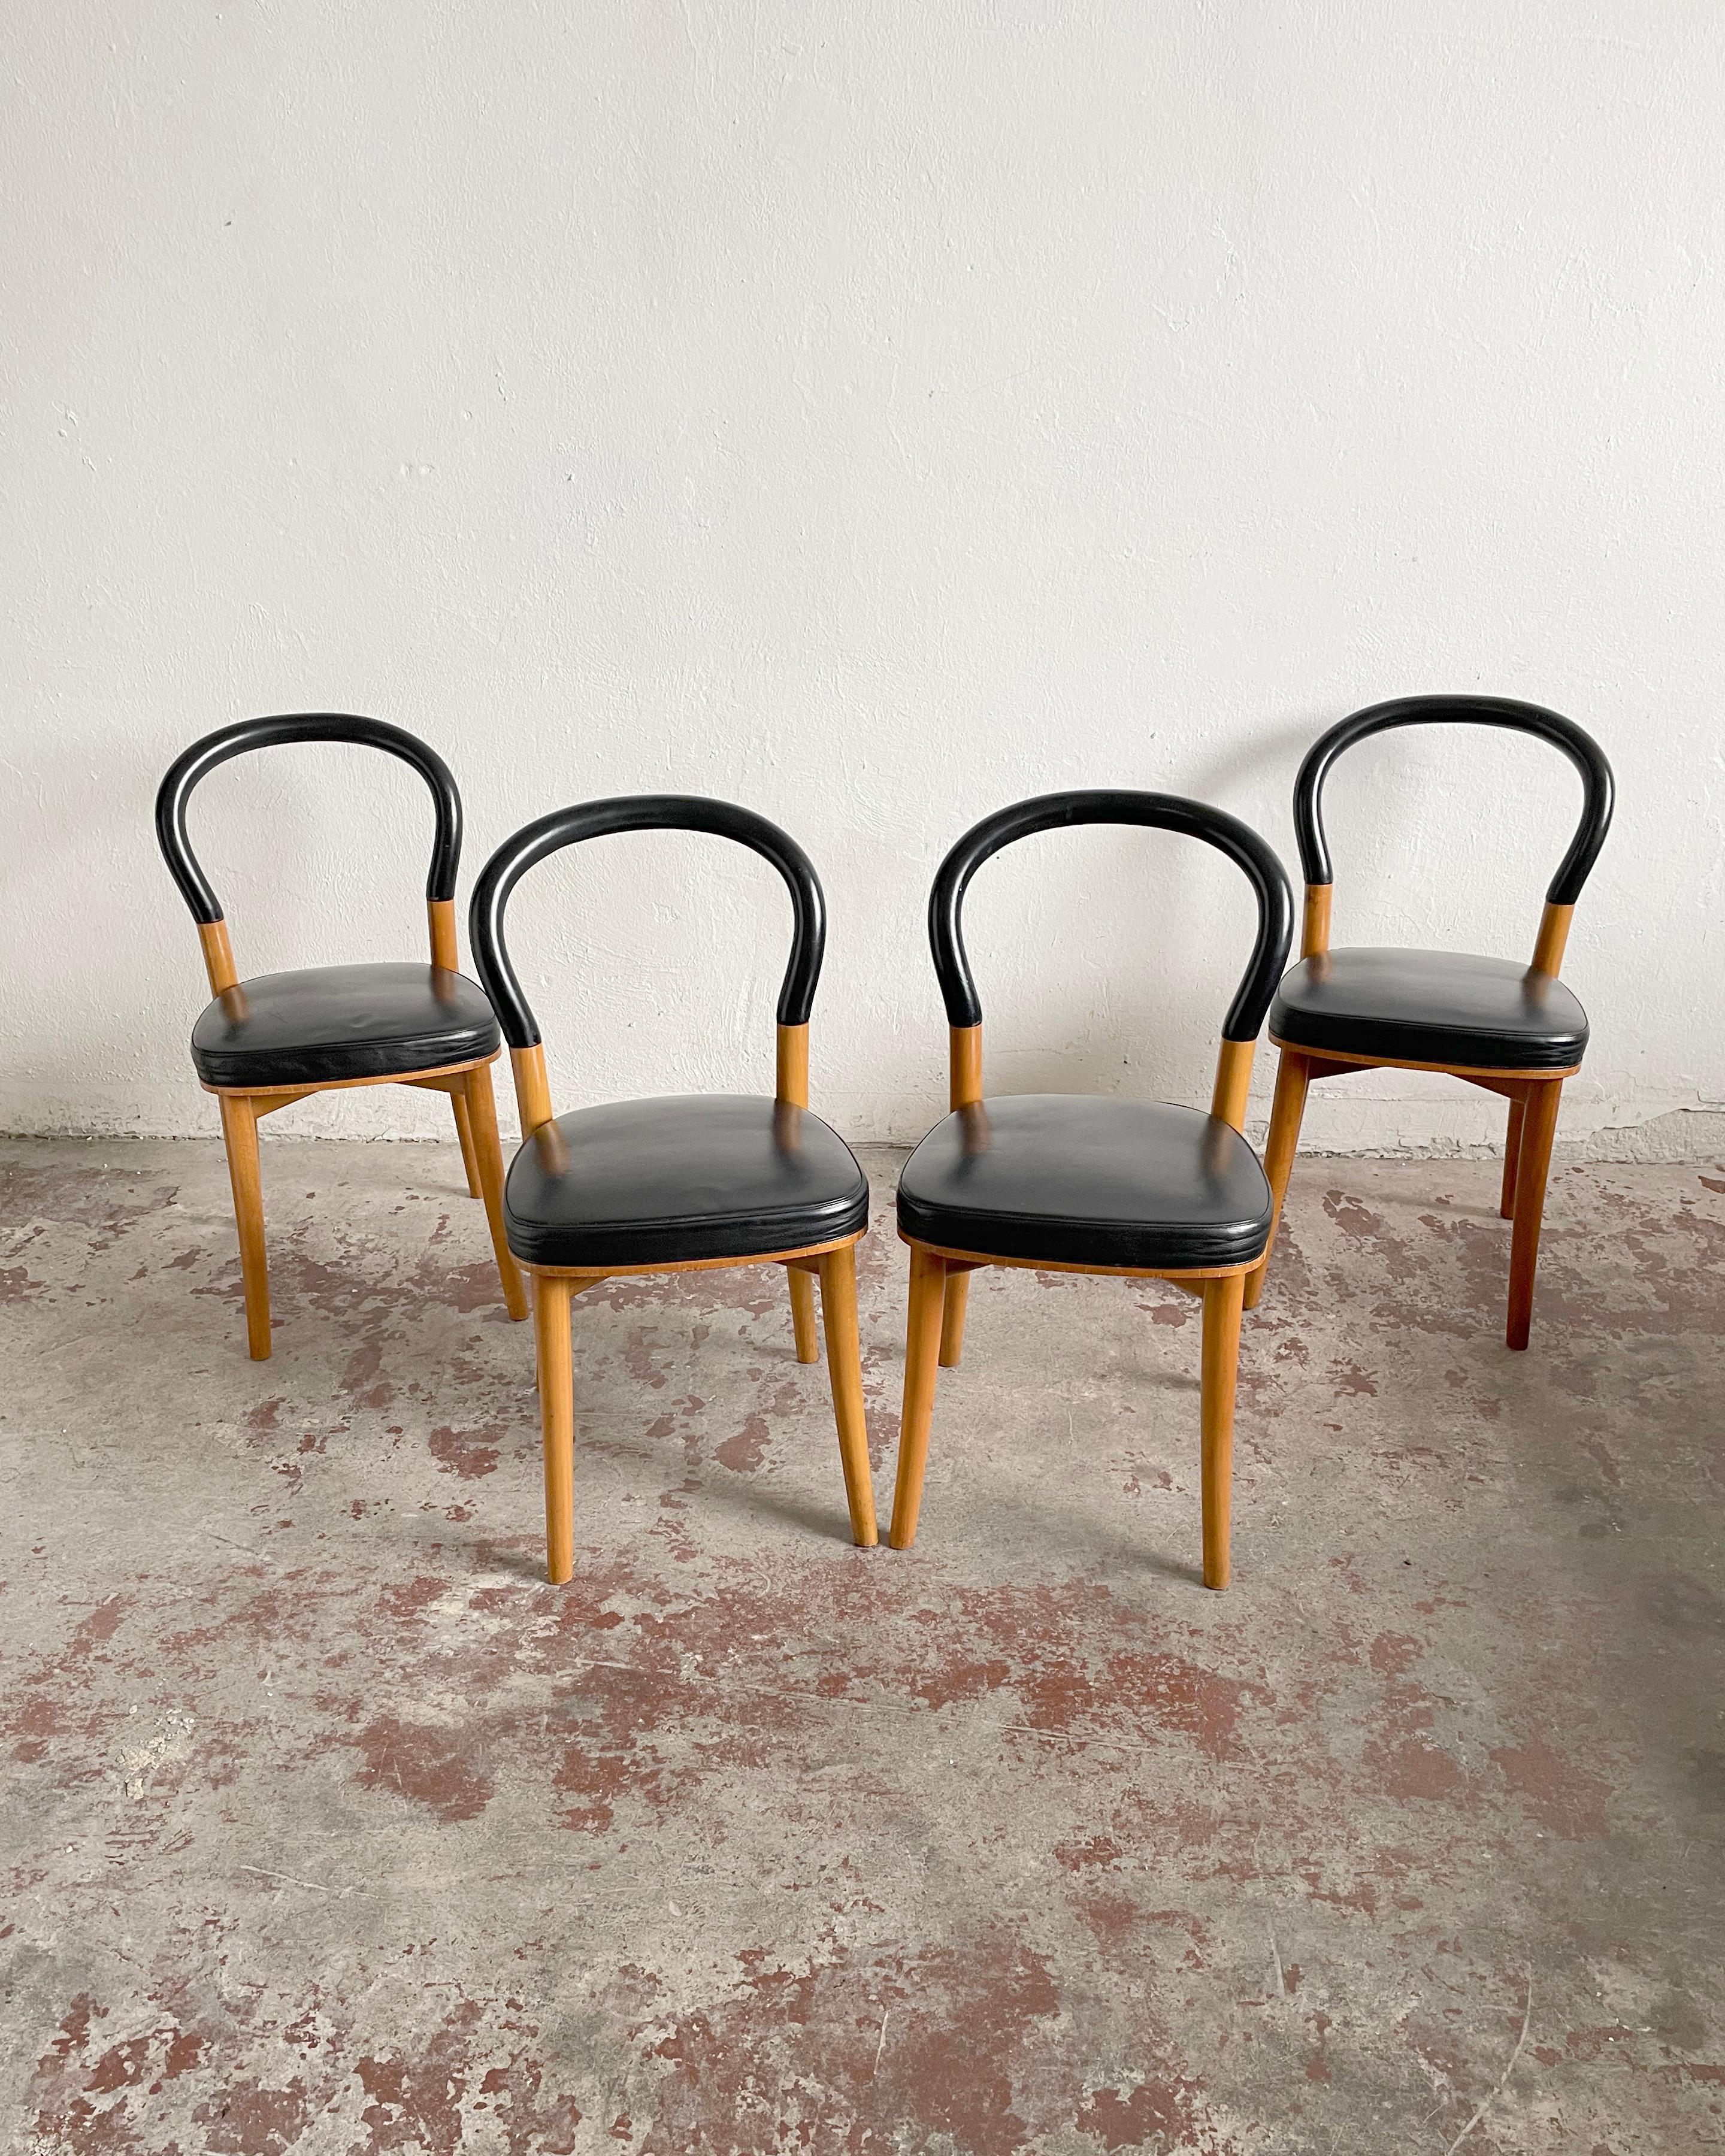 20th Century Set of Four 501 Göteborg Chairs by Cassina, design by Erik Gunnar Asplund